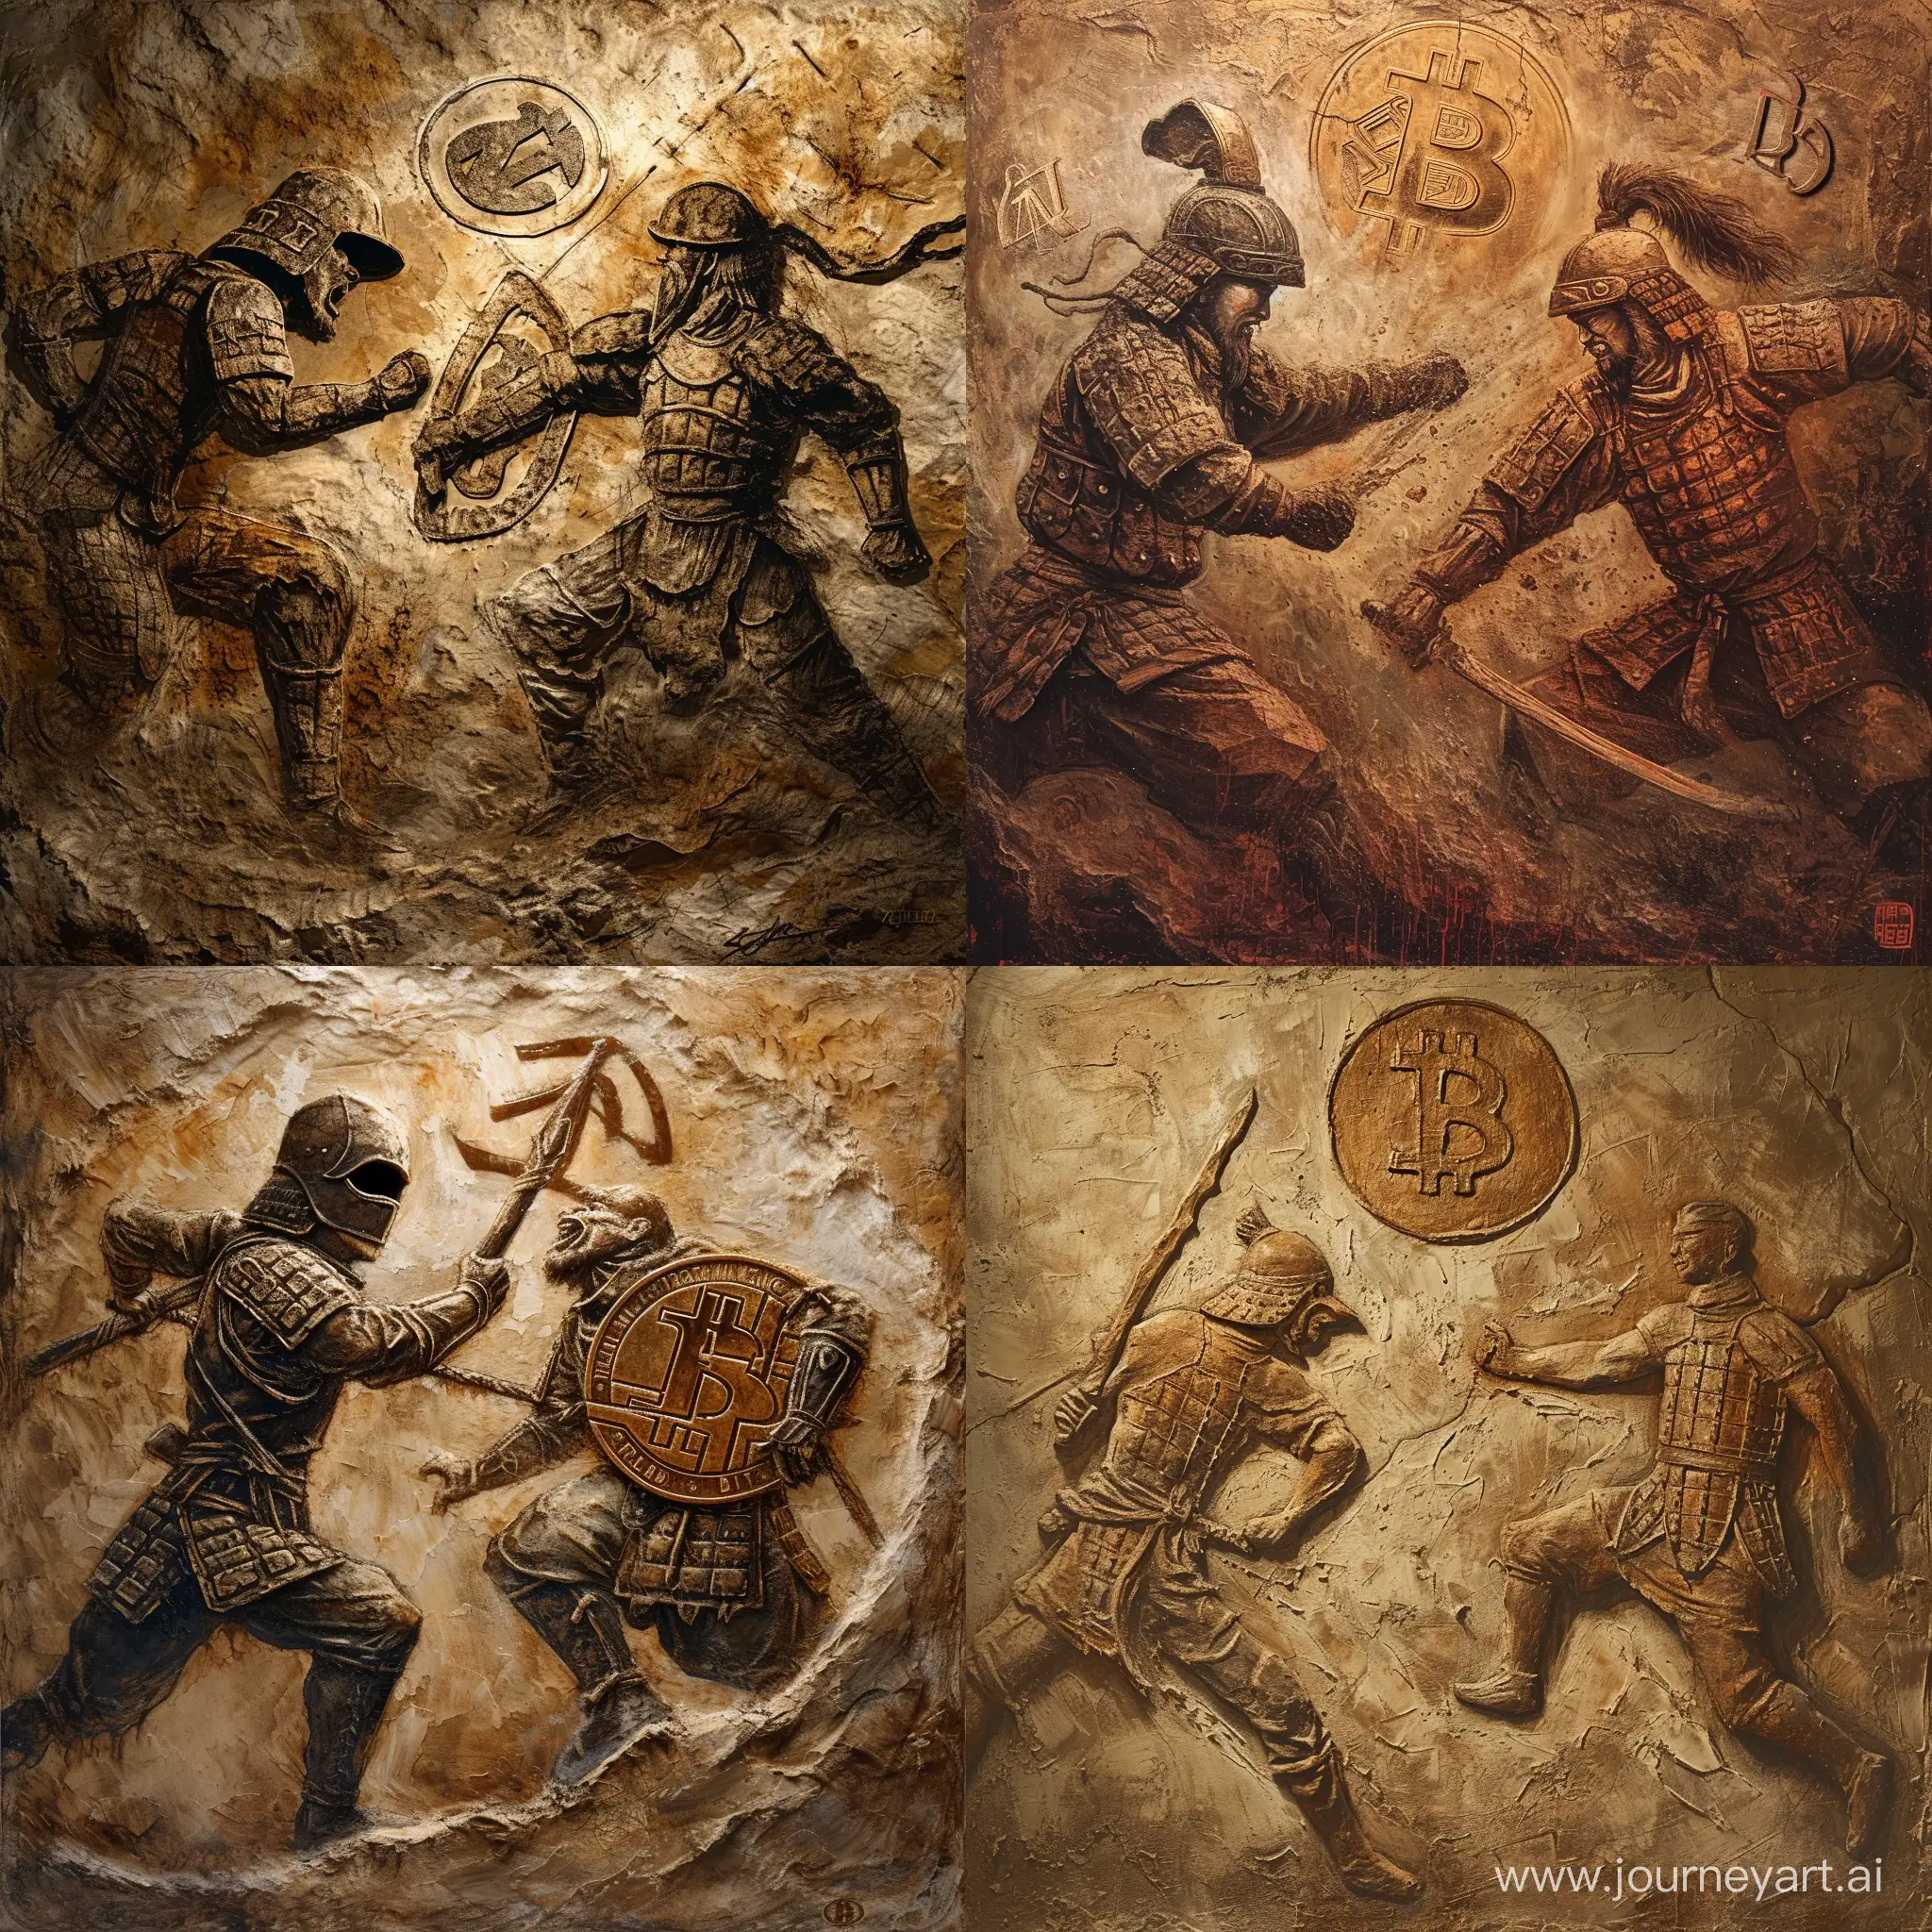 Medieval-Chinese-Soldier-vs-Japanese-Warrior-Battle-Art